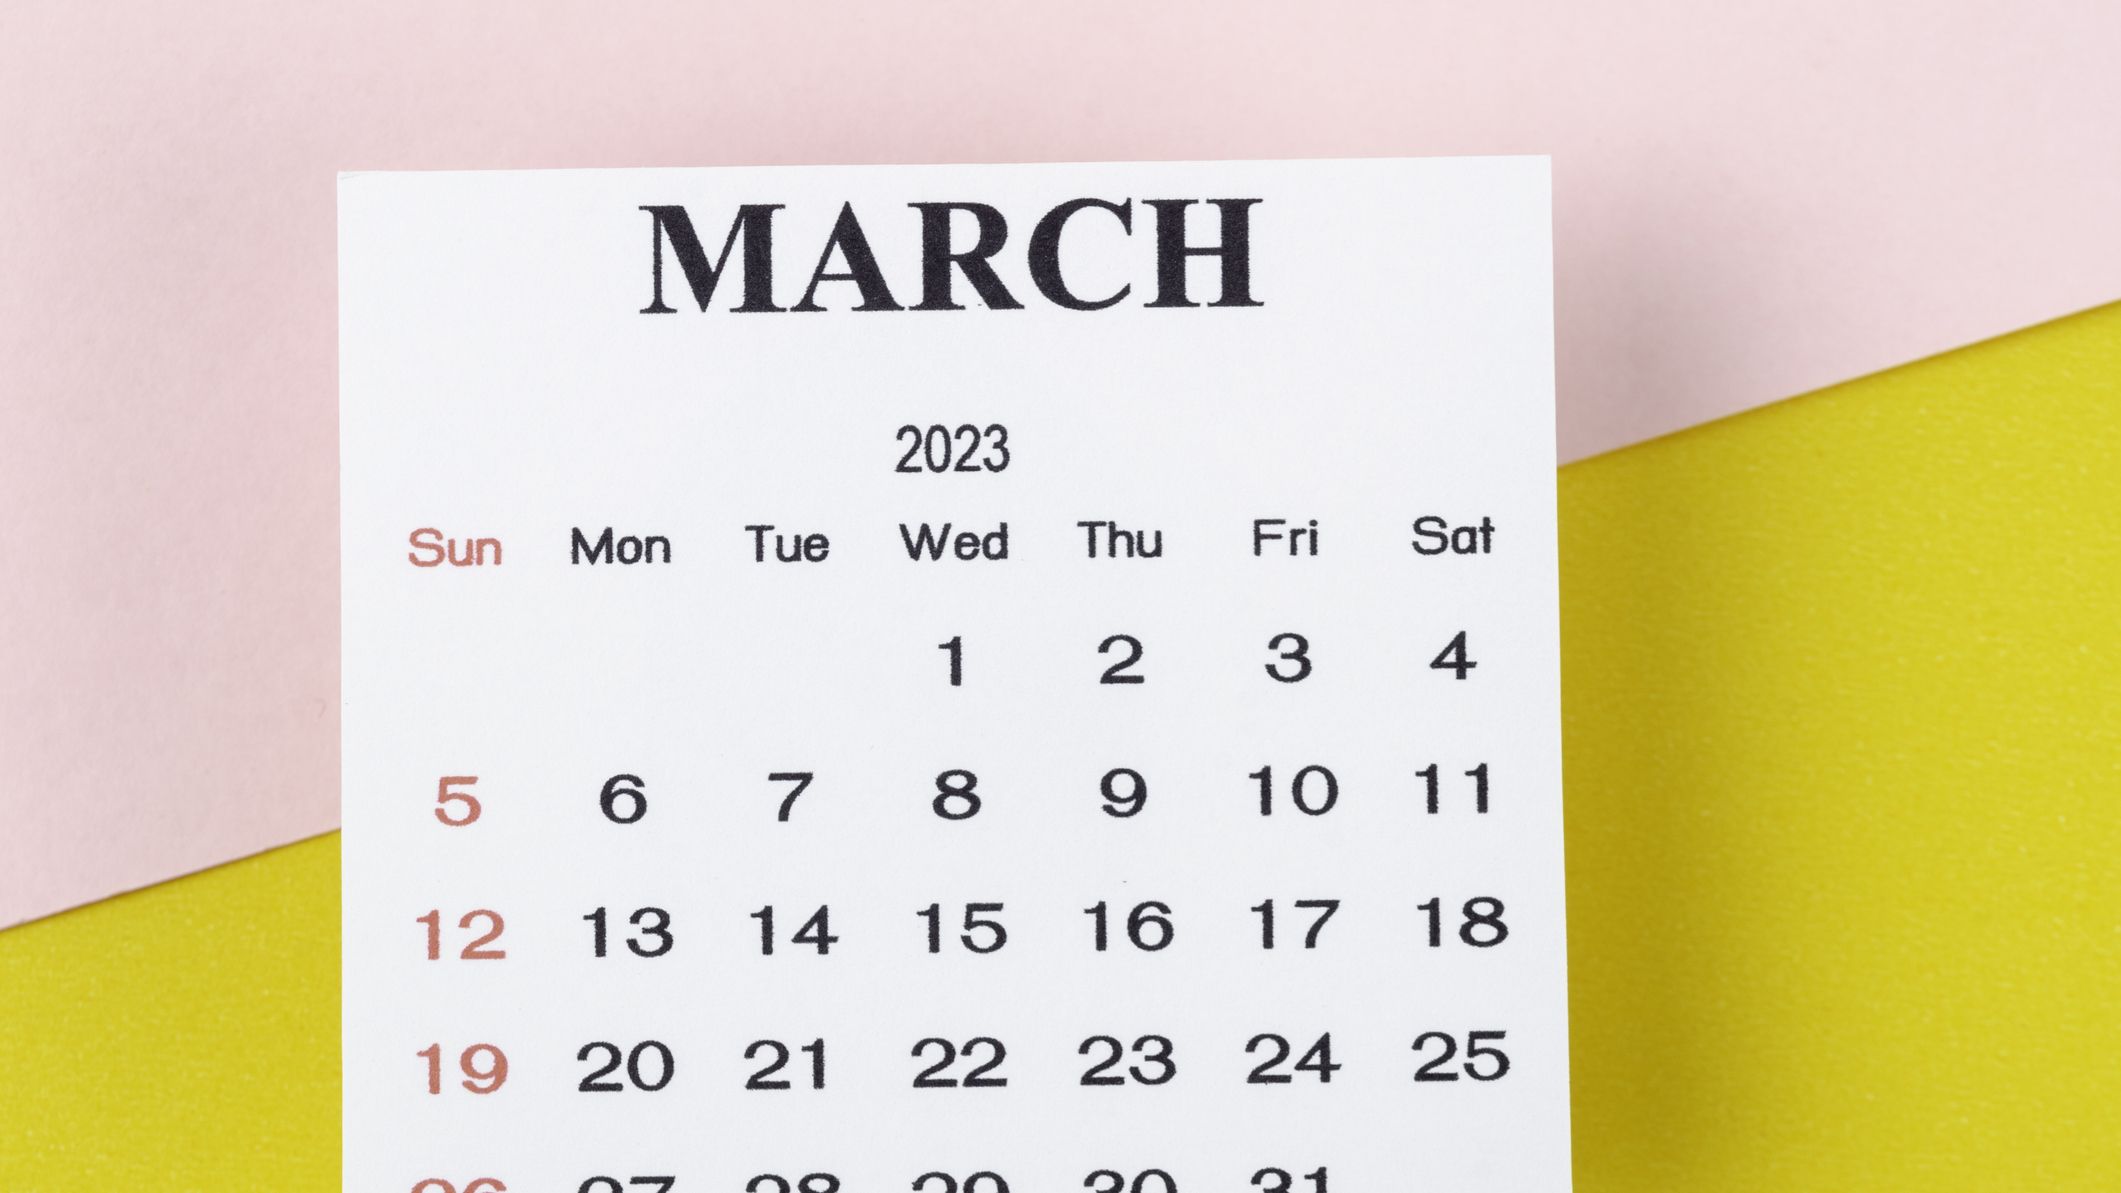 Spring Begins - March 19, 2024 - National Day Calendar